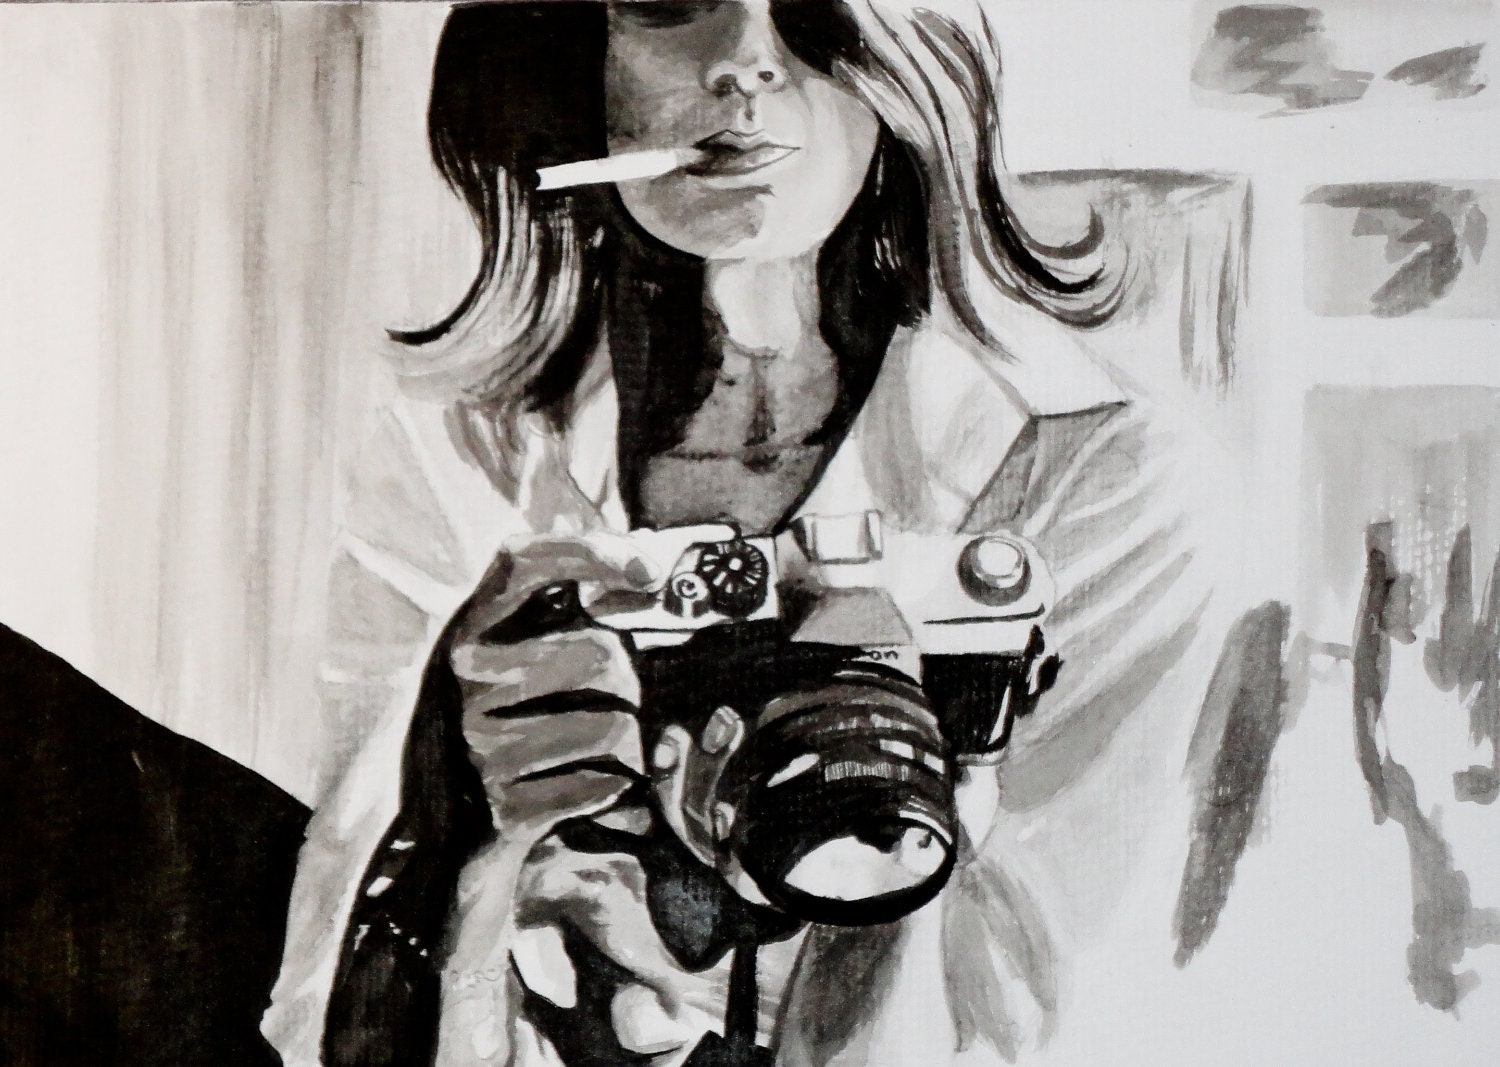 Smoking Woman with Film Camera Art Print in Black and White - KimLegler